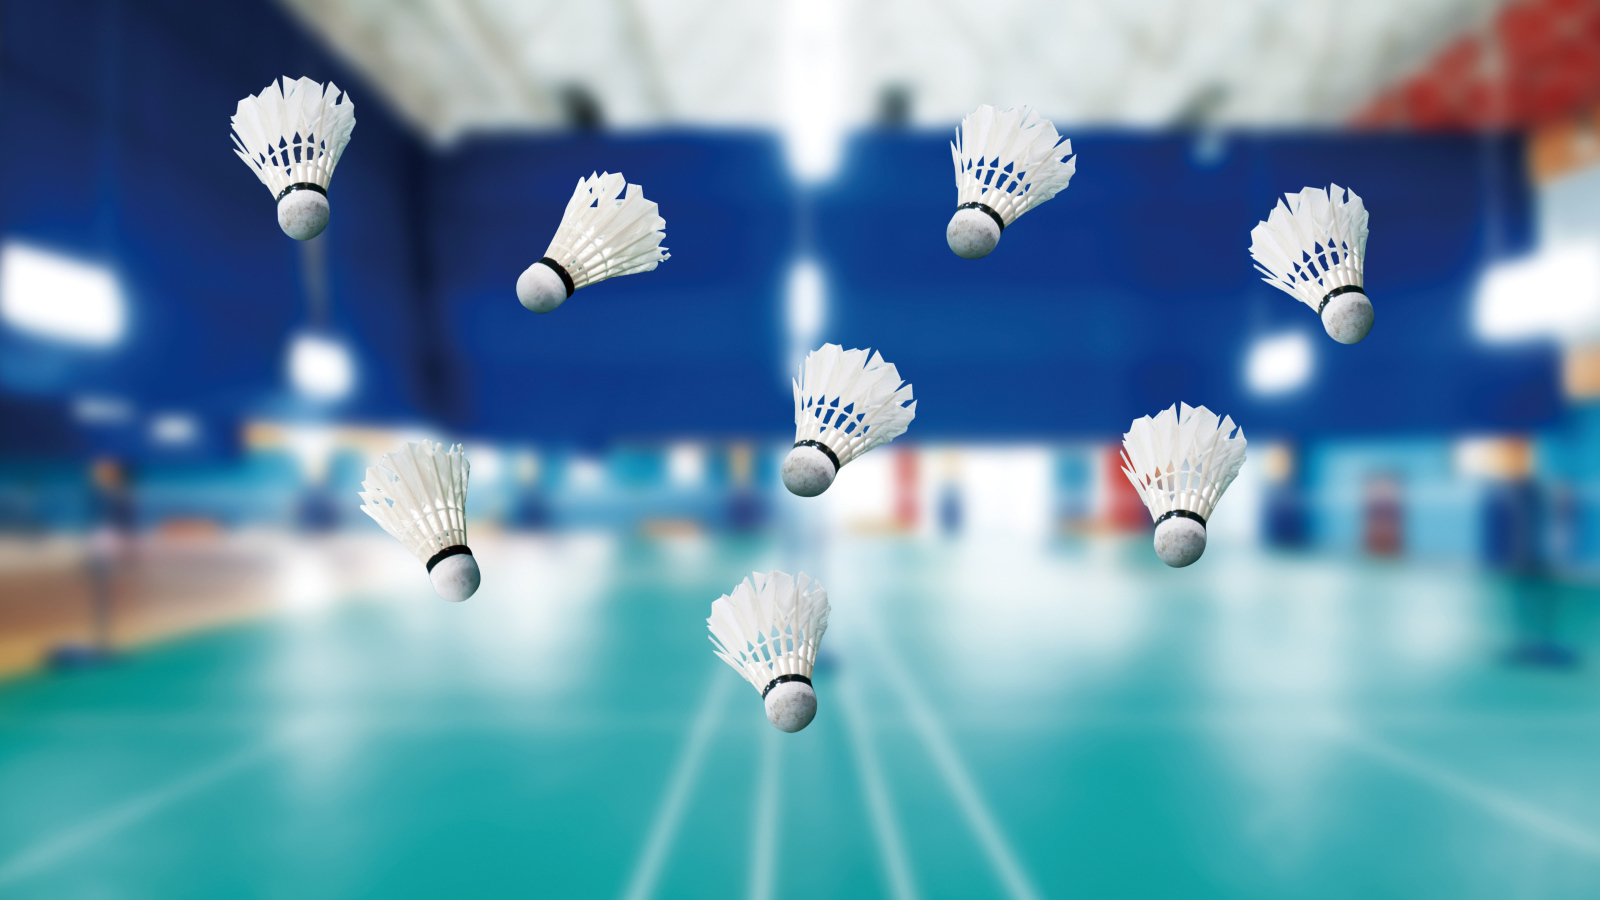 Badminton shuttlecocks in the air